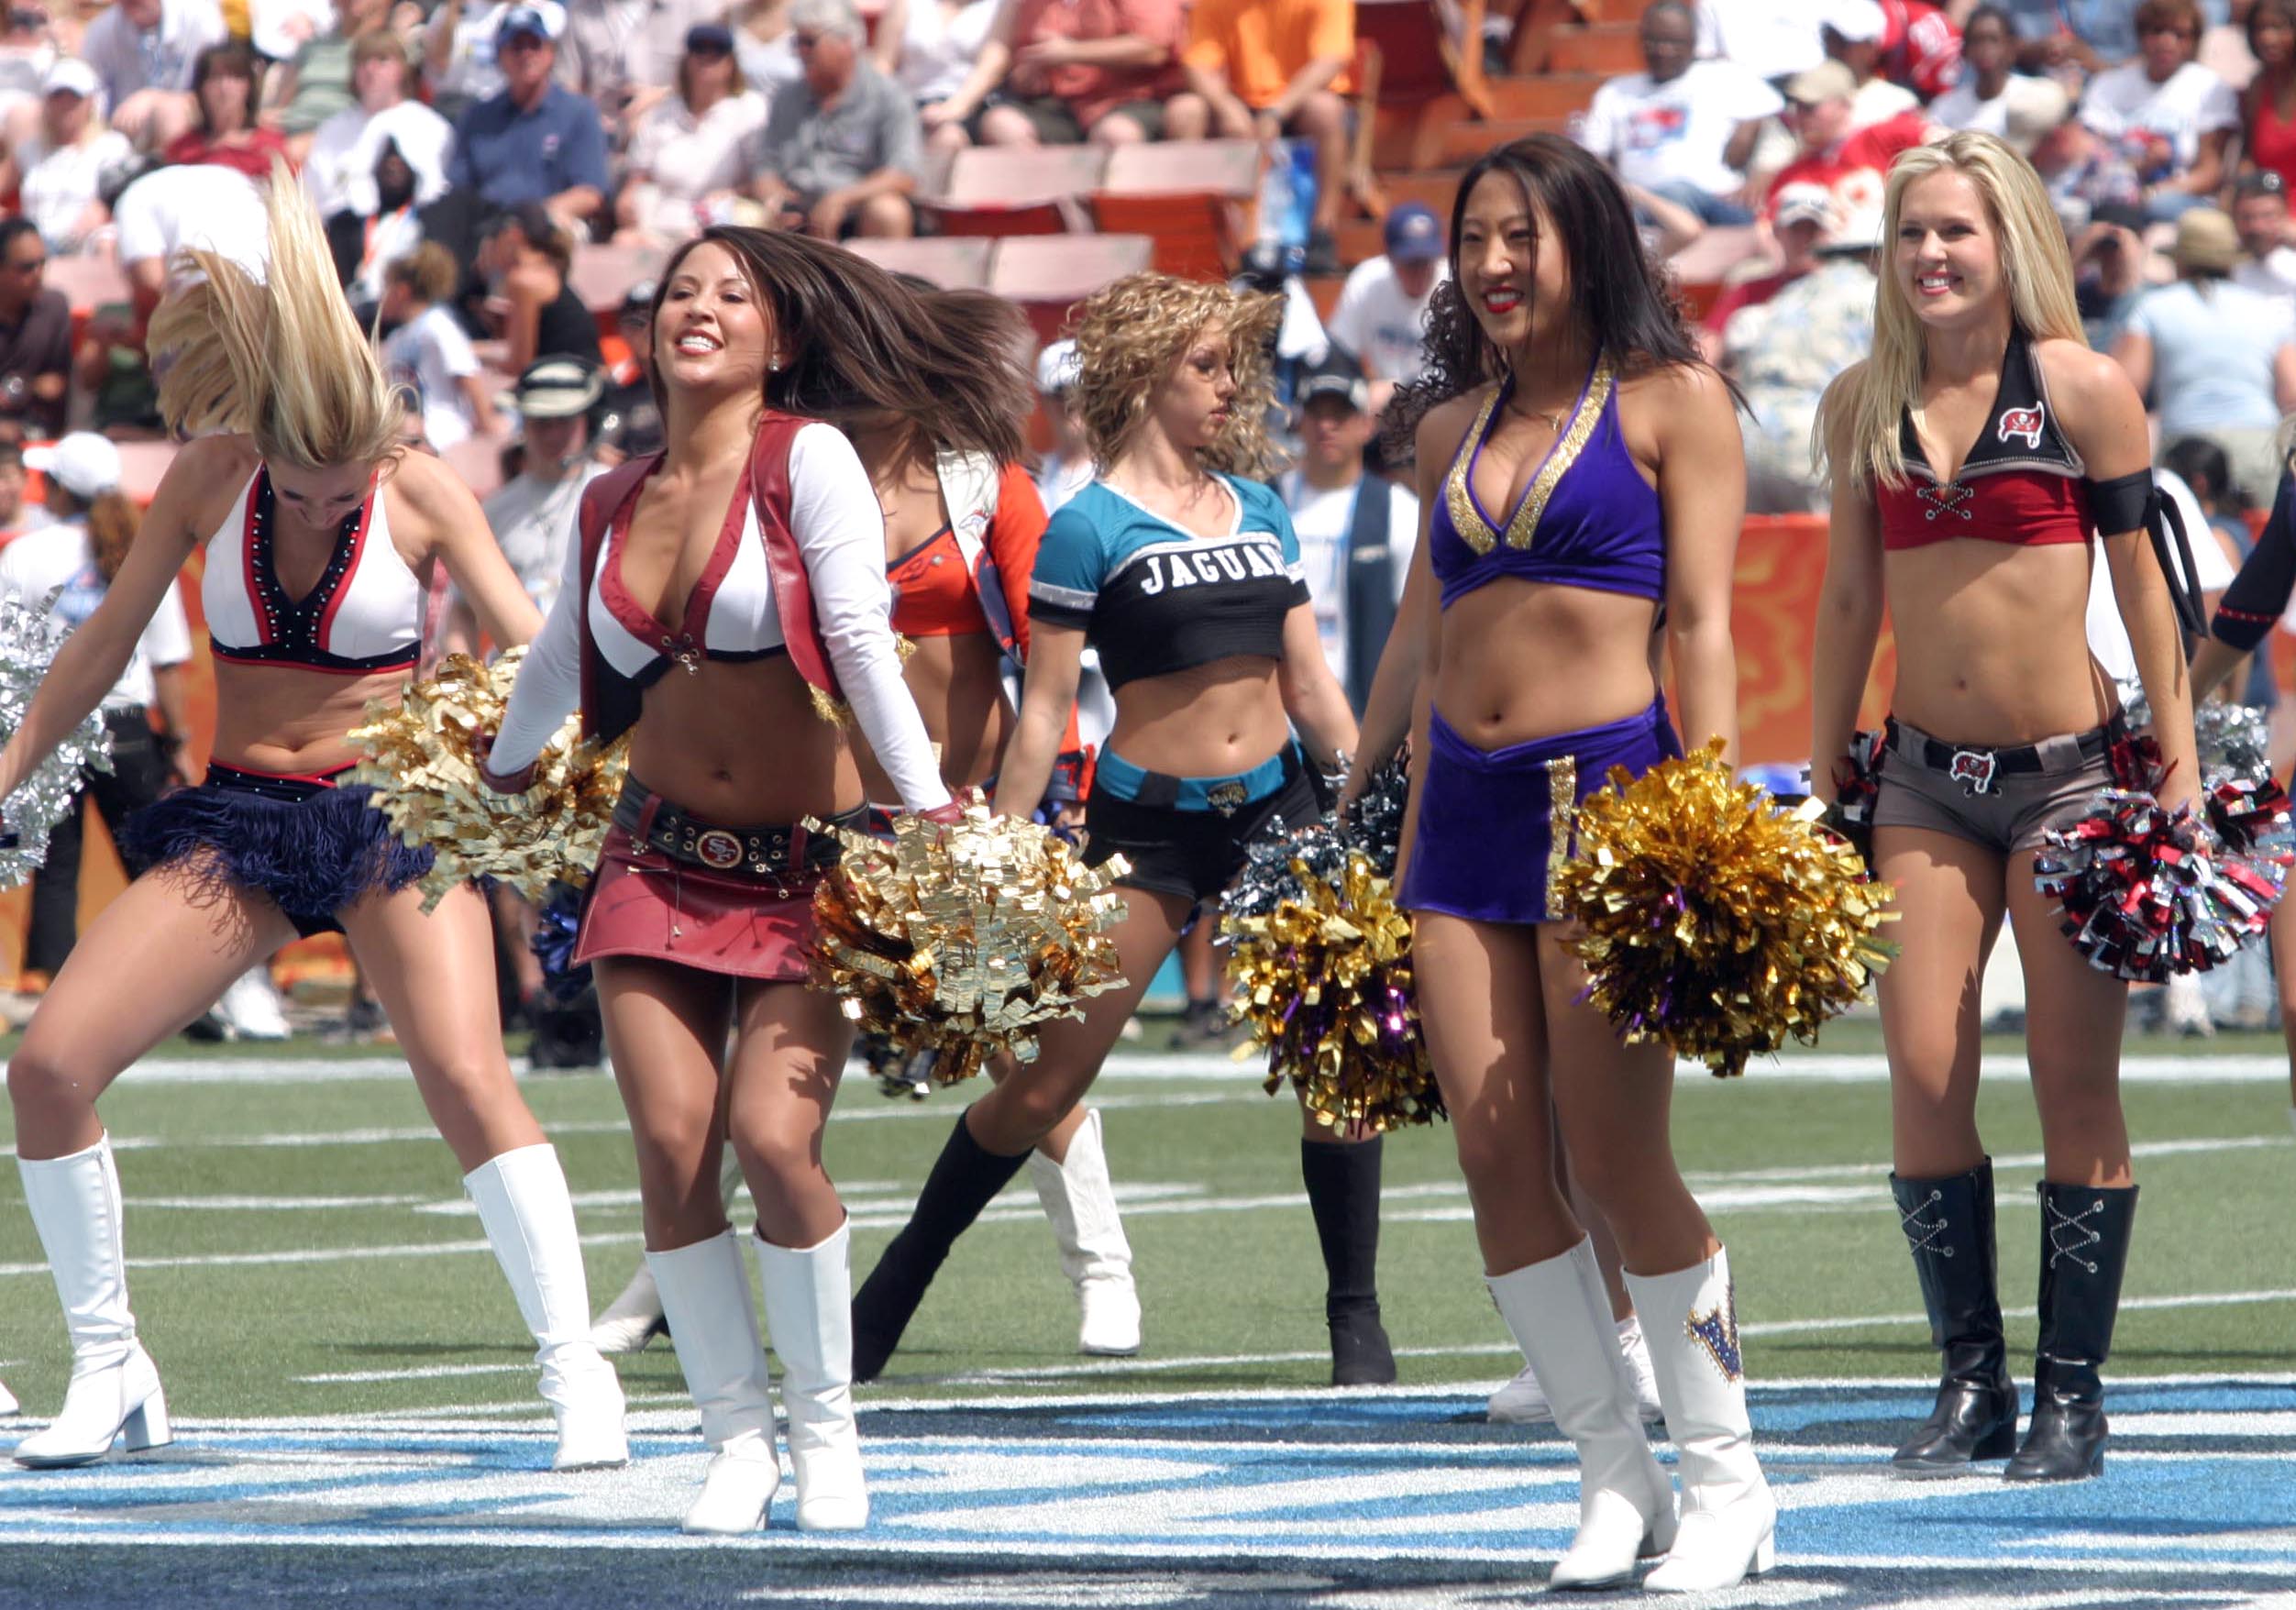 http://de.academic.ru/pictures/dewiki/80/Pro_Bowl_2006_cheerleaders.jpg